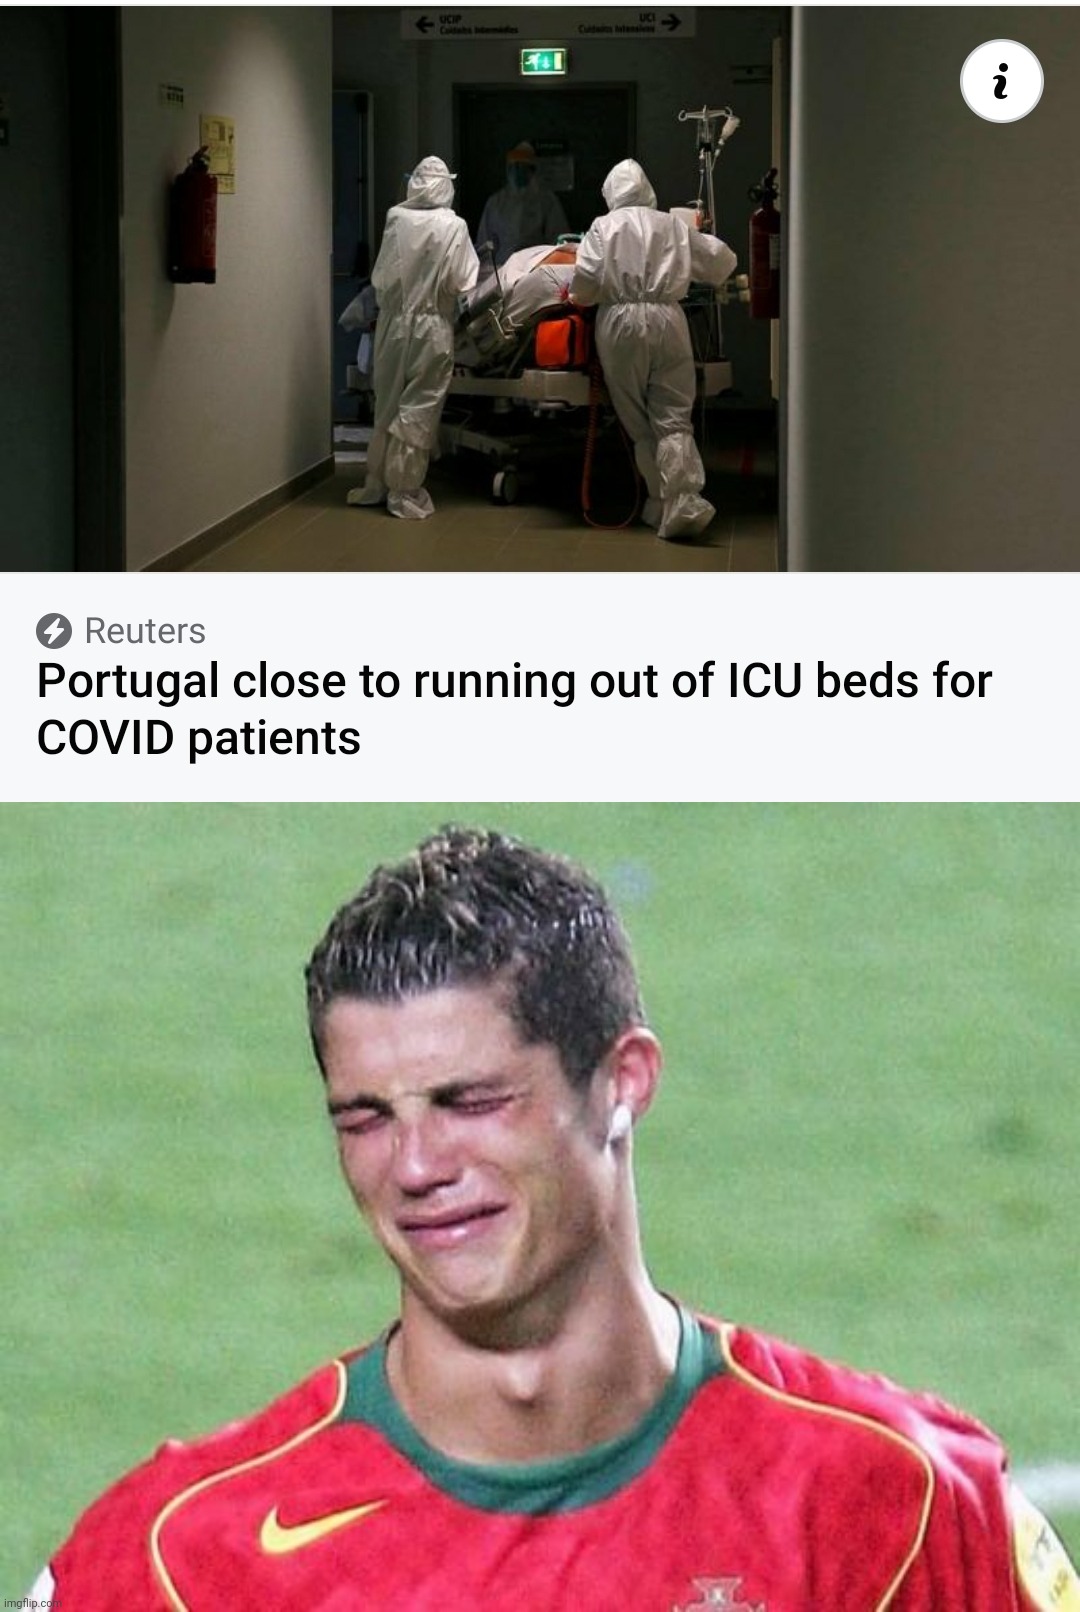 LIEK DIS IF U CRI EVRYTIEM | image tagged in memes,portugal,covid-19,coronavirus | made w/ Imgflip meme maker